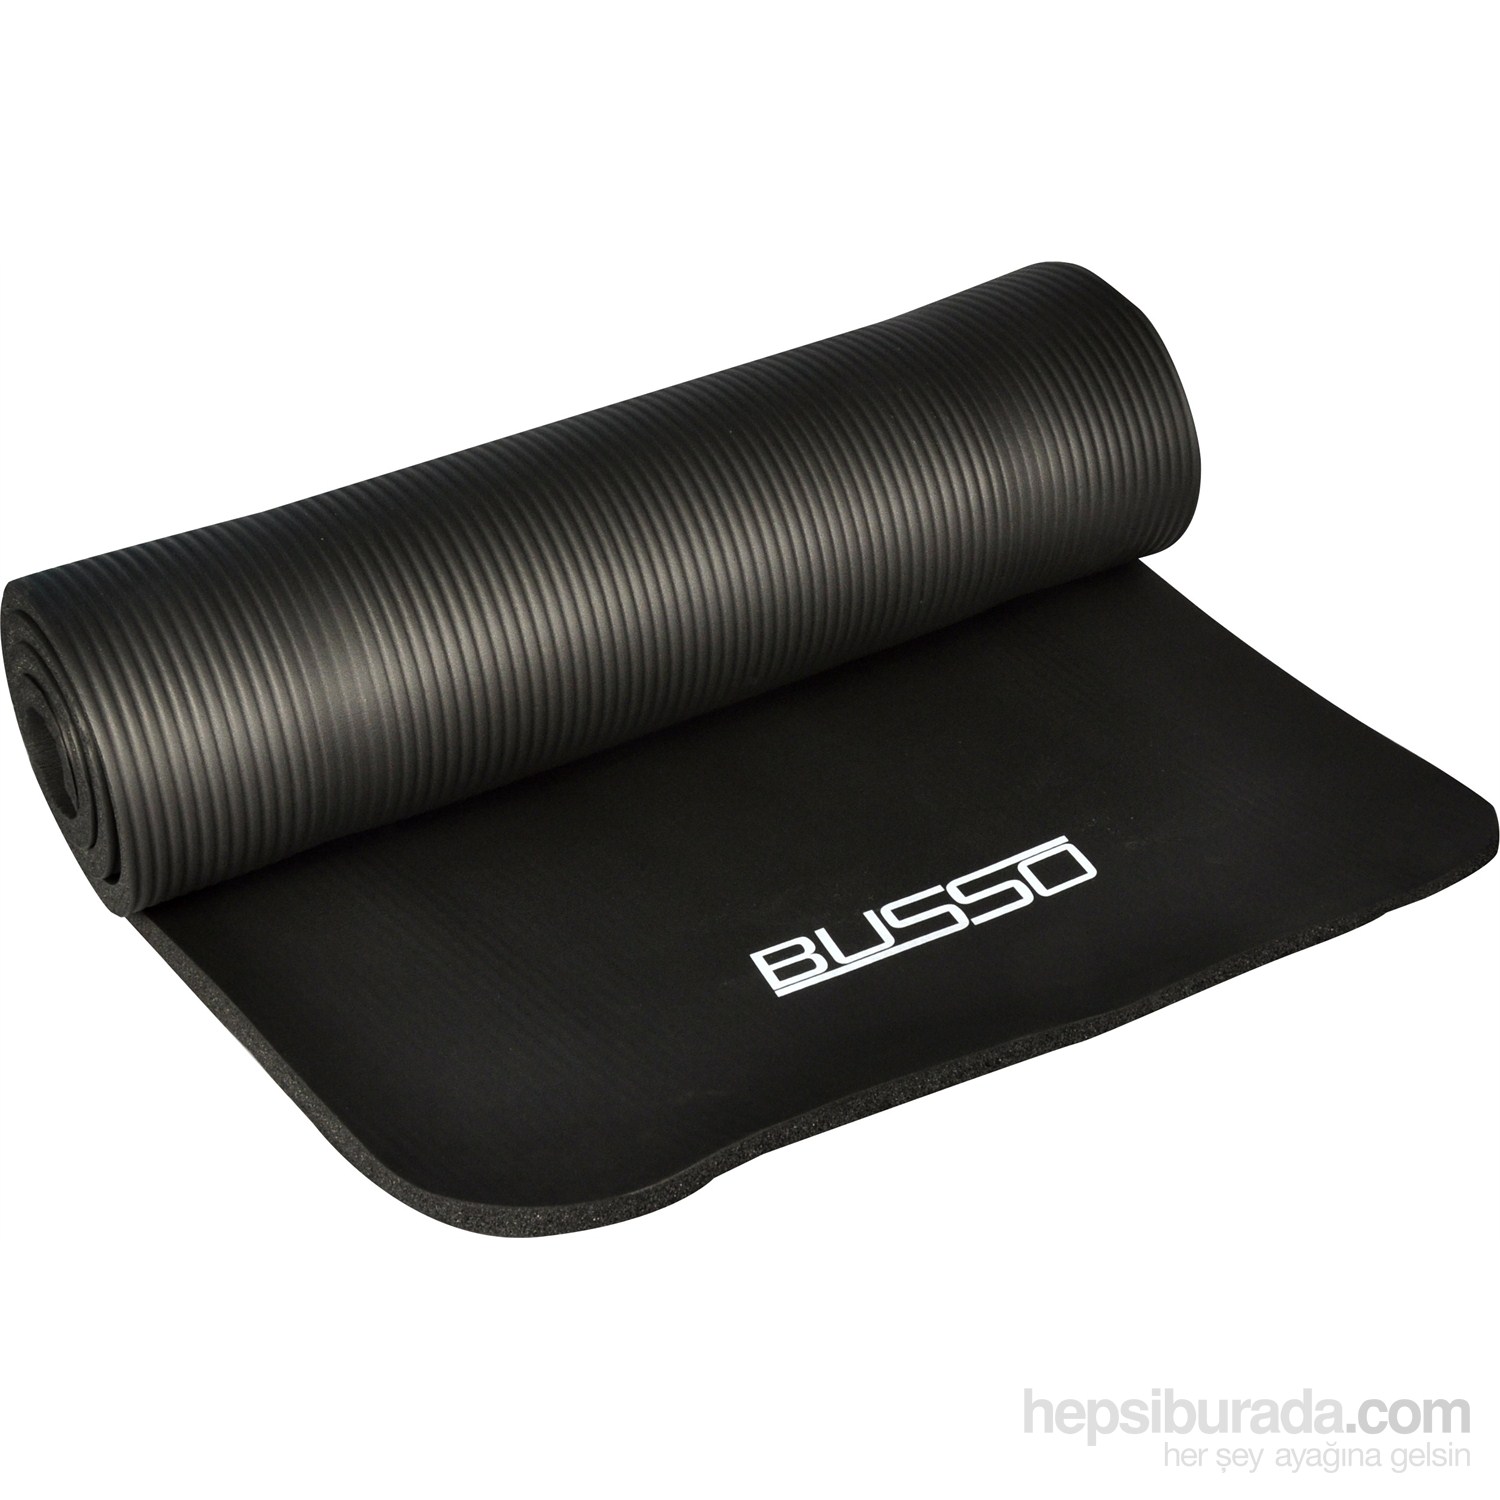 Busso Bs 105 Pilates & Yoga Minderi (183X58x1cm)